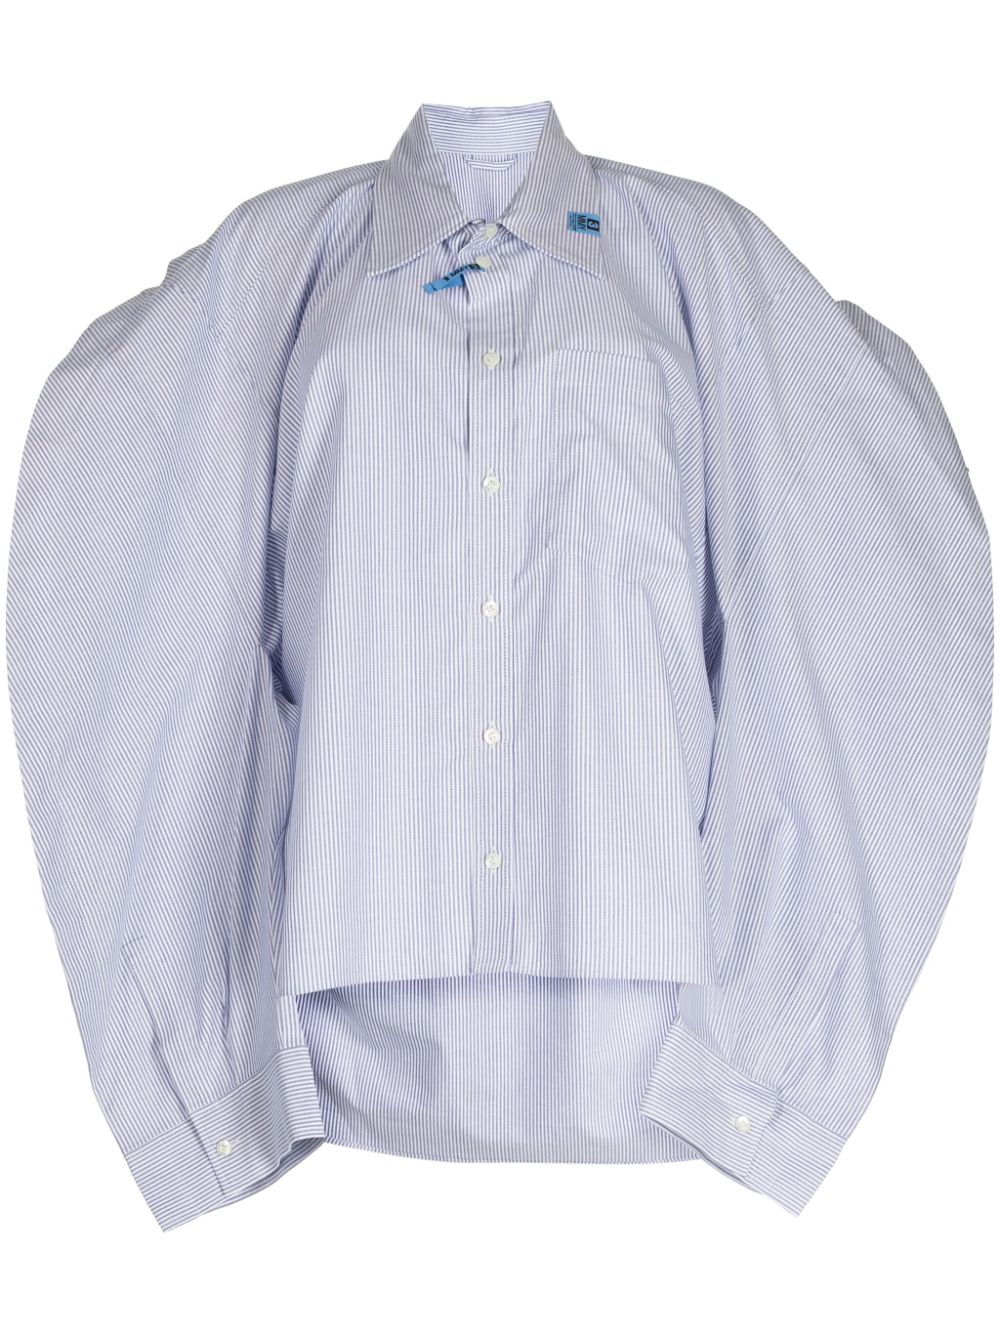 Maison MIHARA YASUHIRO striped wide-sleeves cotton shirt - Blue von Maison MIHARA YASUHIRO